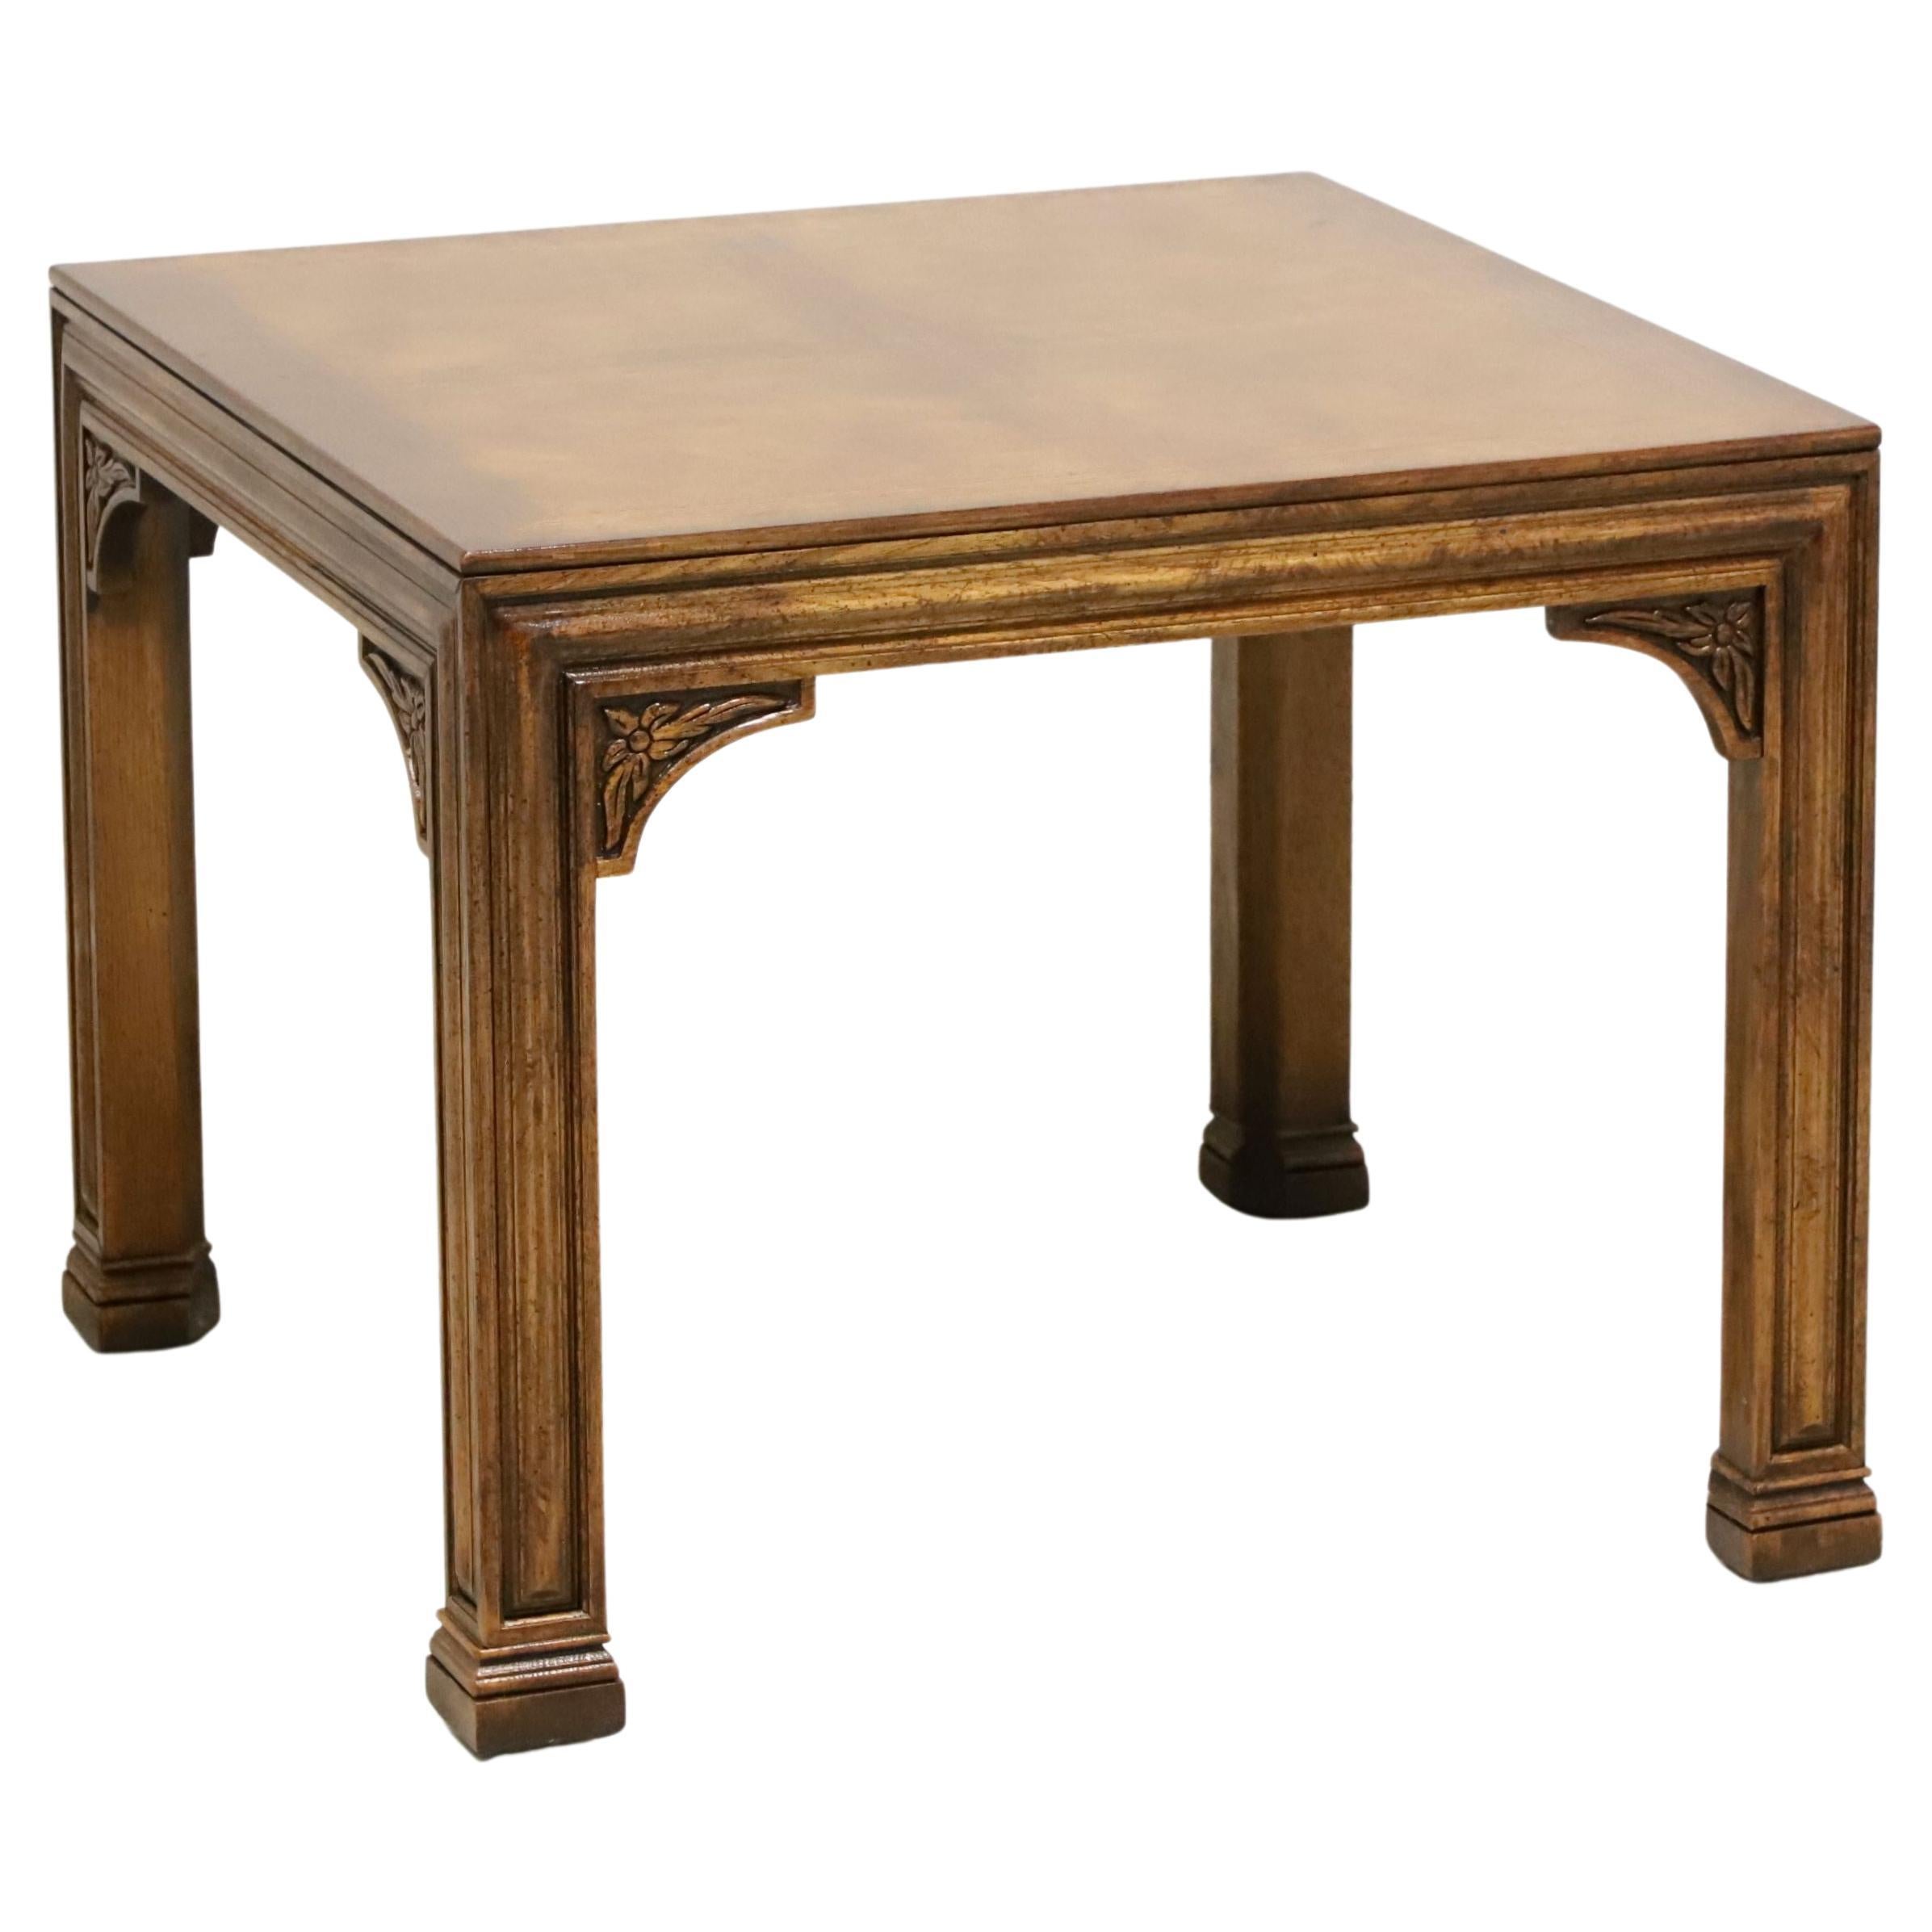 HENREDON Burl Oak French Influenced Square Side Table